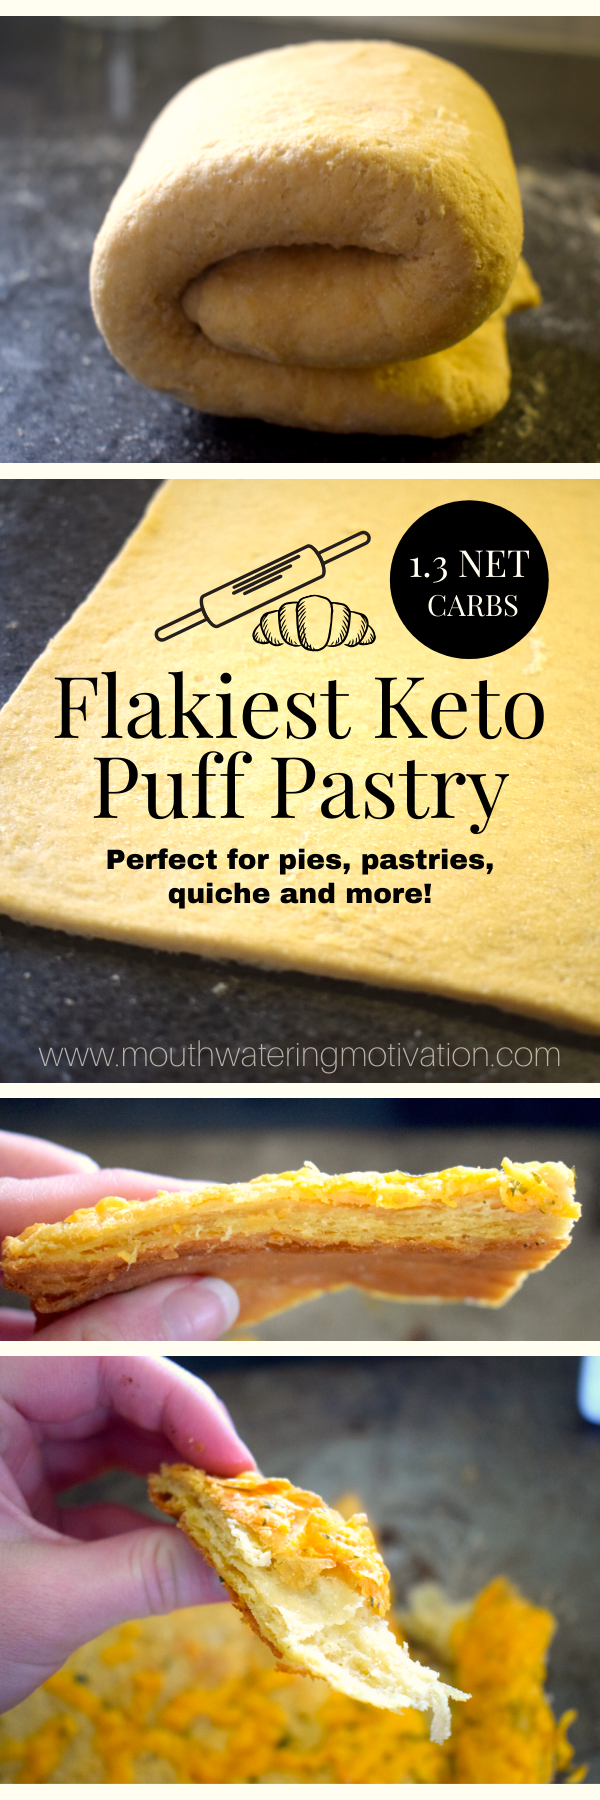 Flakiest Keto Puff Pastry